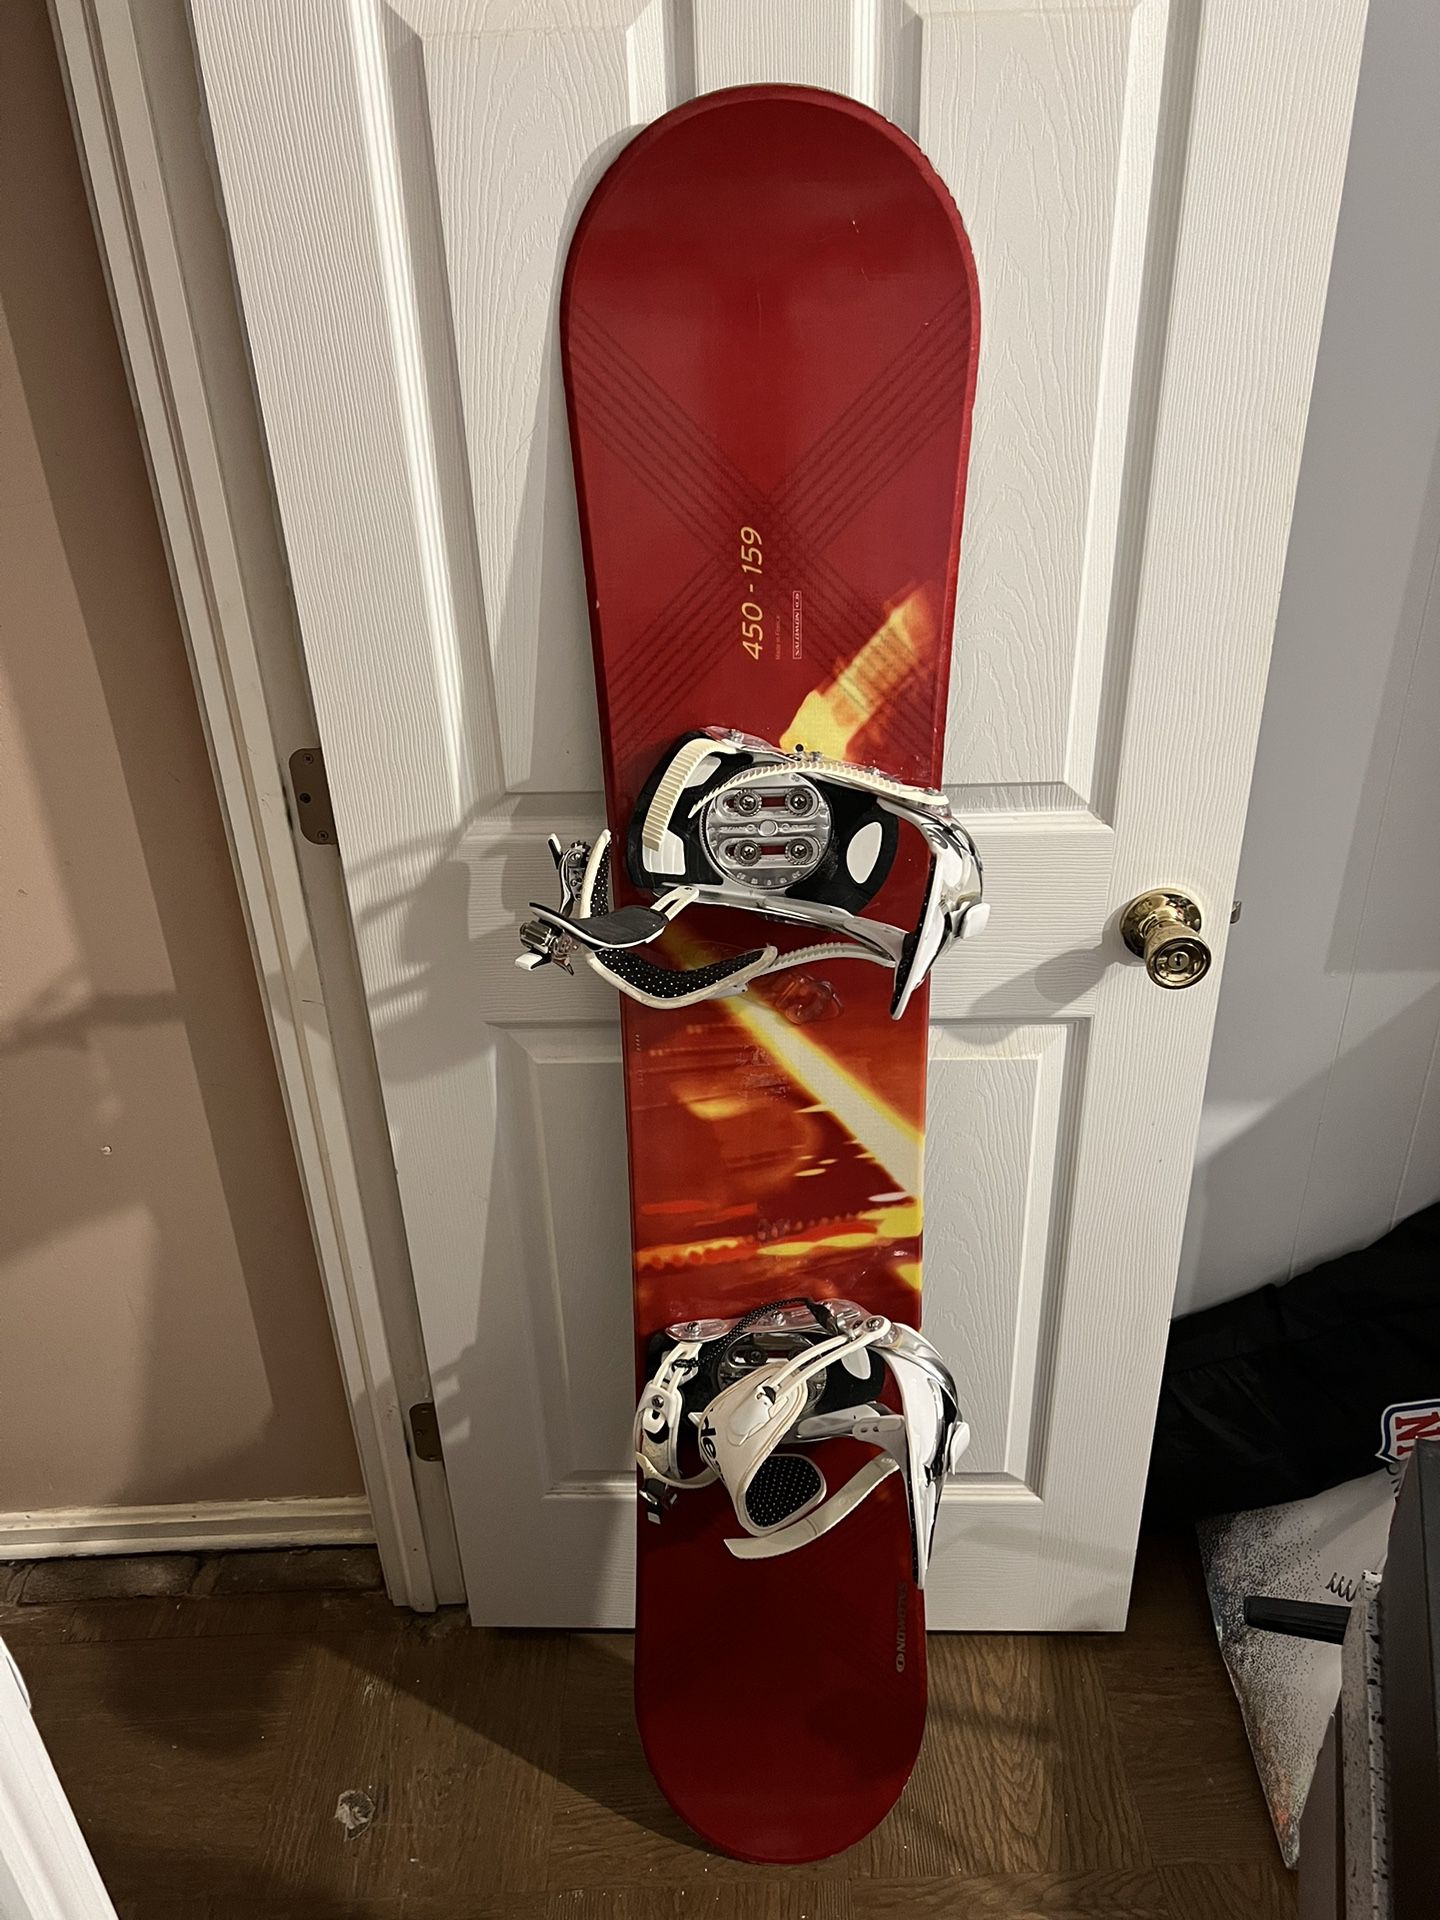 Snowboard And Helmet